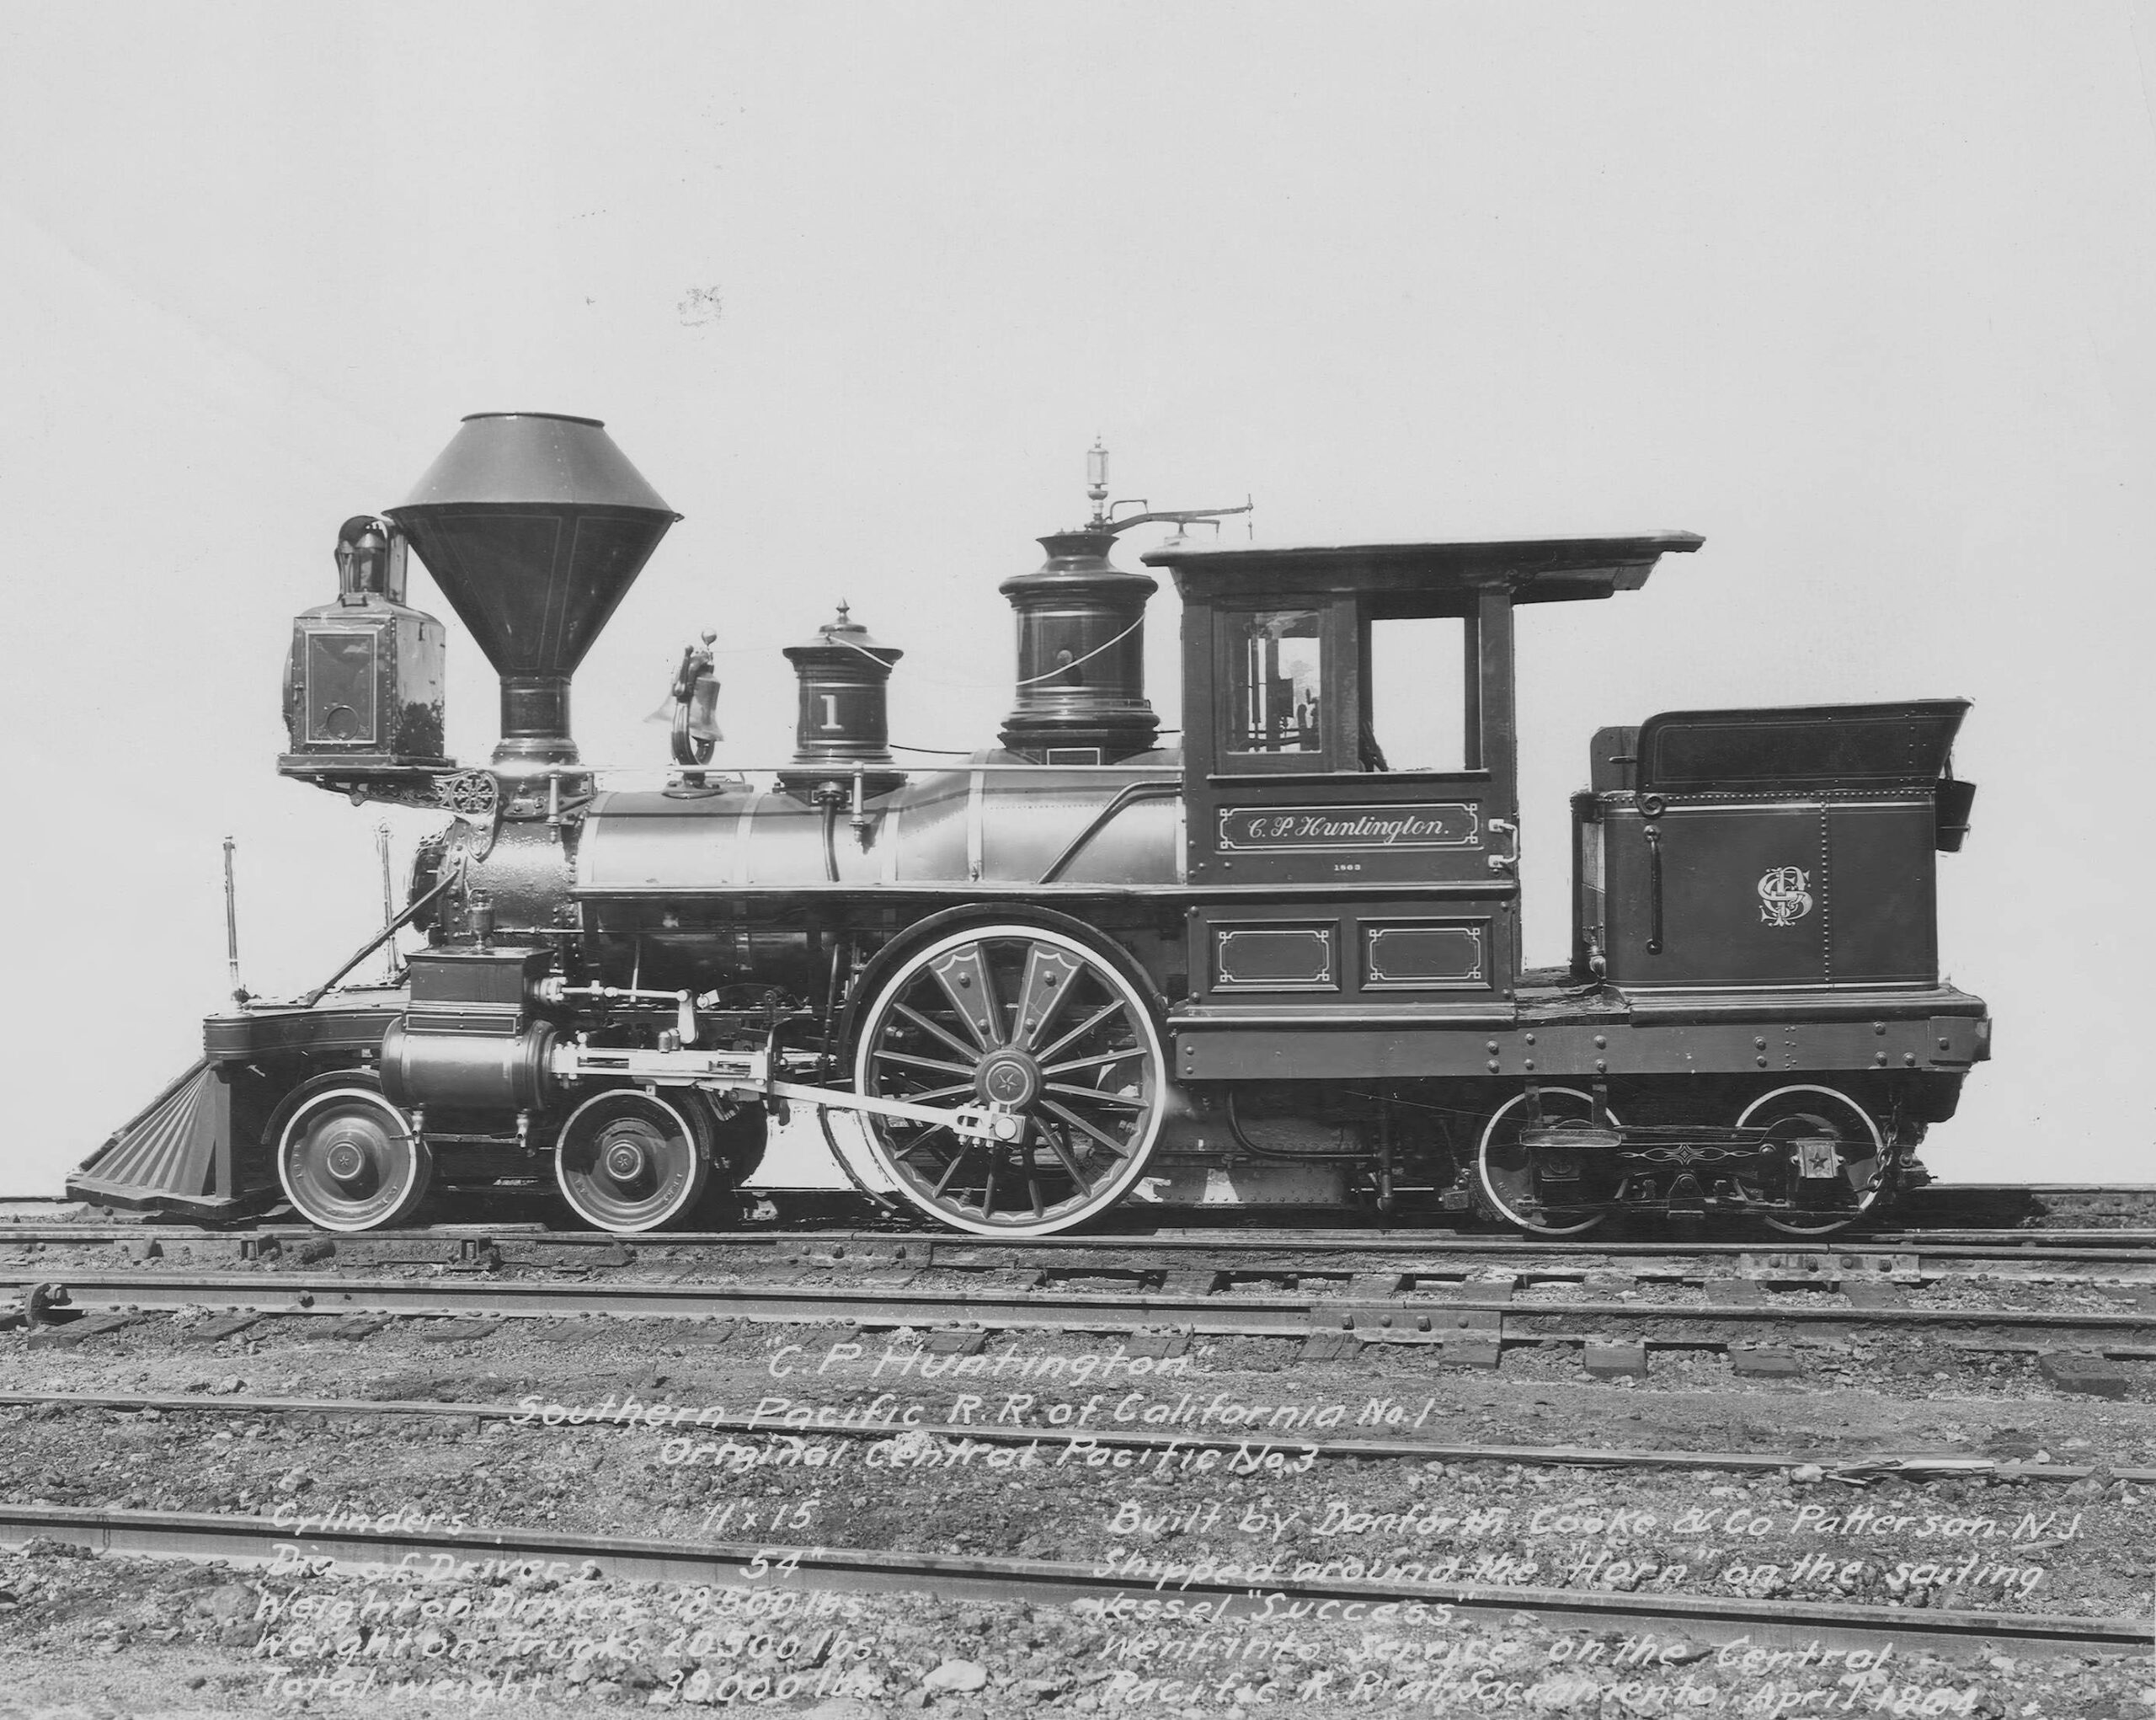 Named after Collis P. Huntington was the "C.P. Huntington" locomotive, 1864